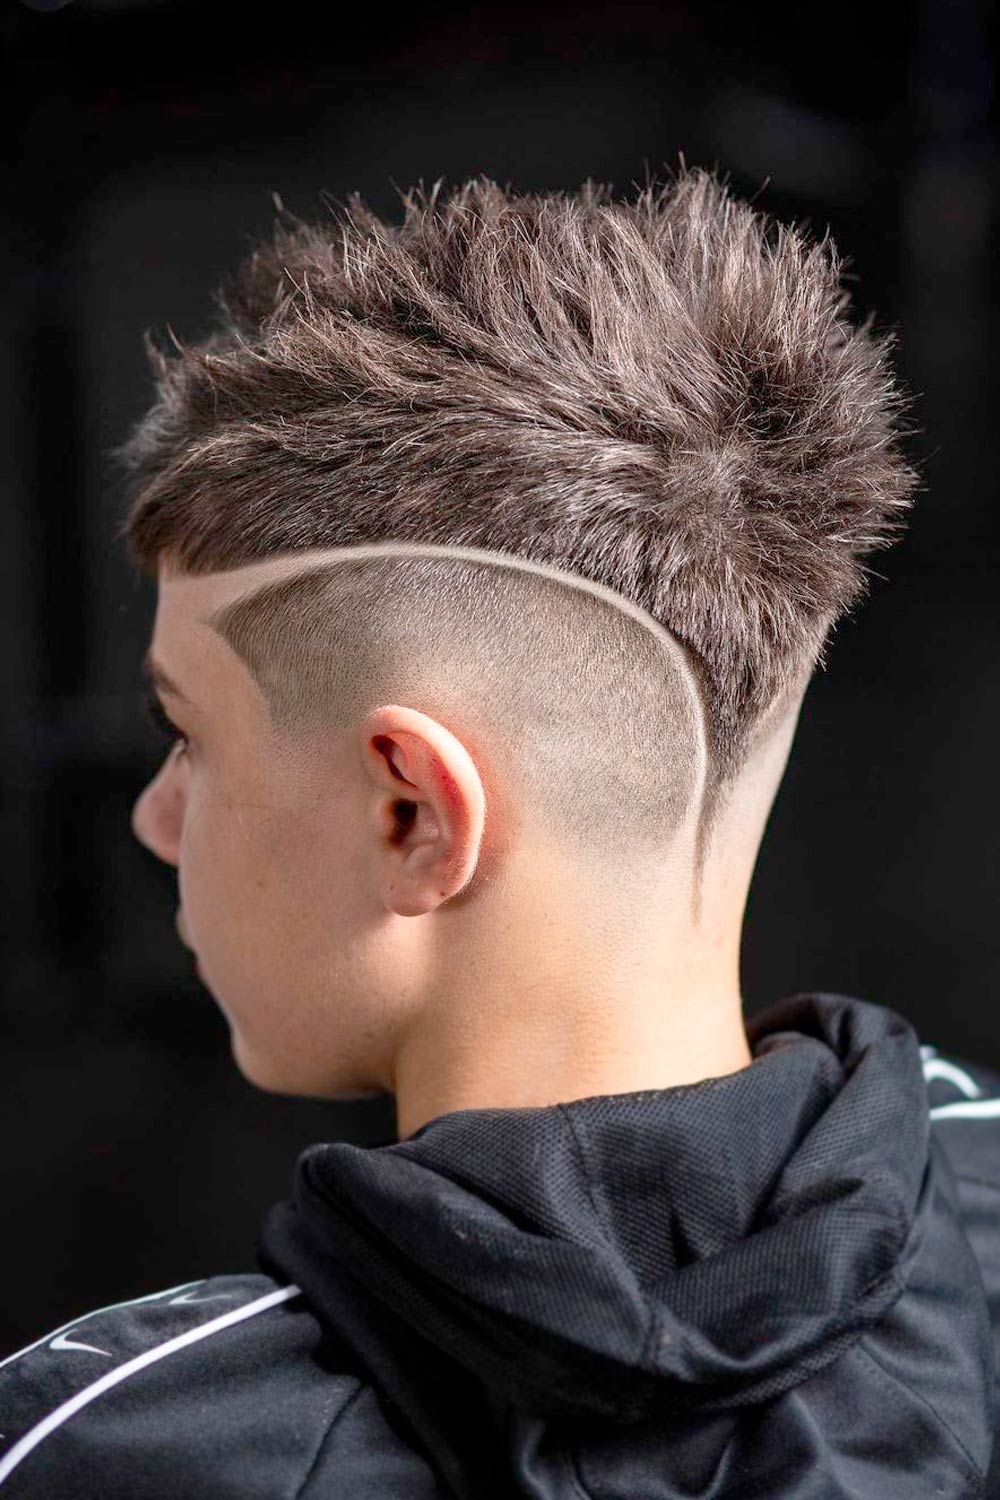 Layered Medium Haircuts For Boys, teenage boy haircut, boys hair cuts, boys hairstyles, nice haircut for boys, hairstyles boys